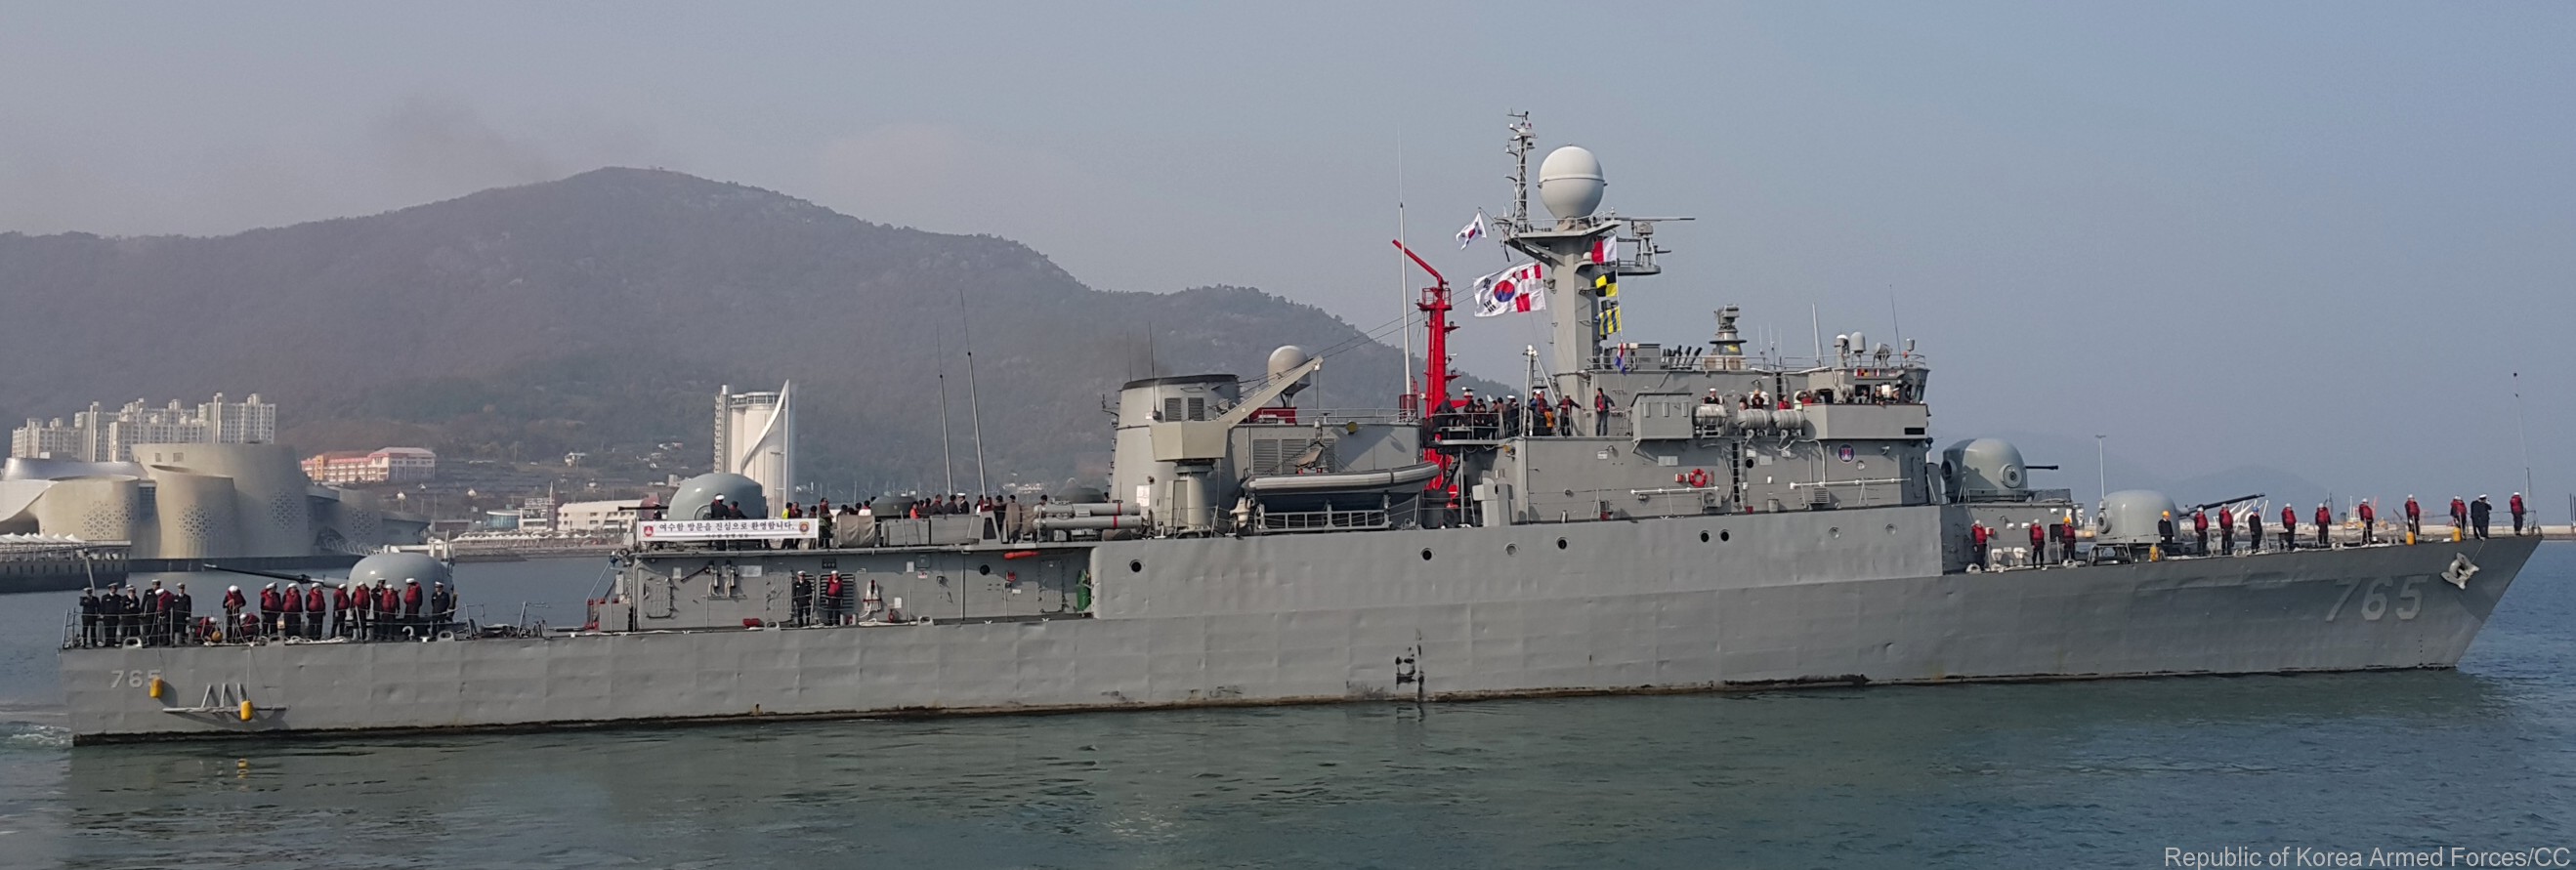 pcc-765 roks yeosu pohang class patrol combat corvette republic of korea navy rokn 02